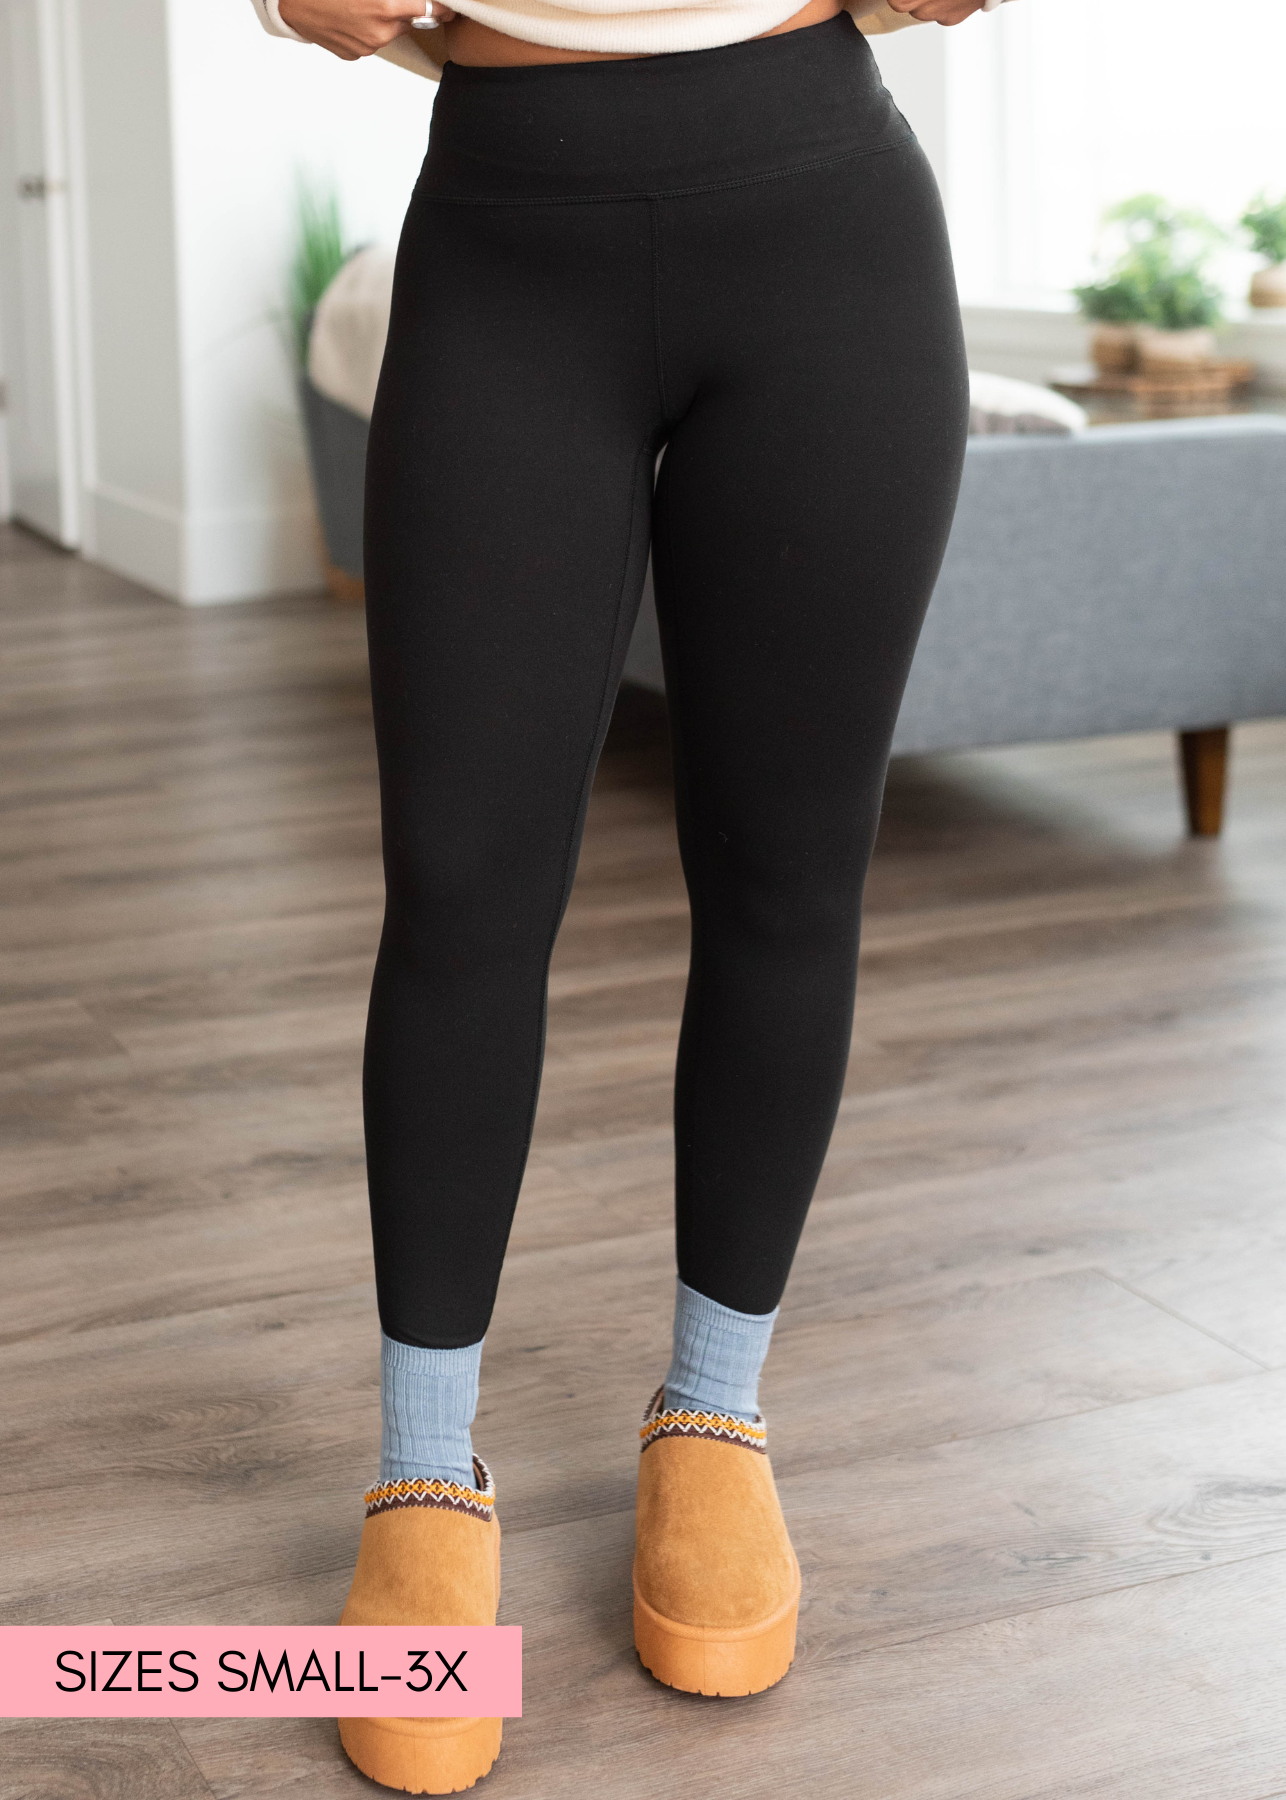 Black plus size leggings women's 3x